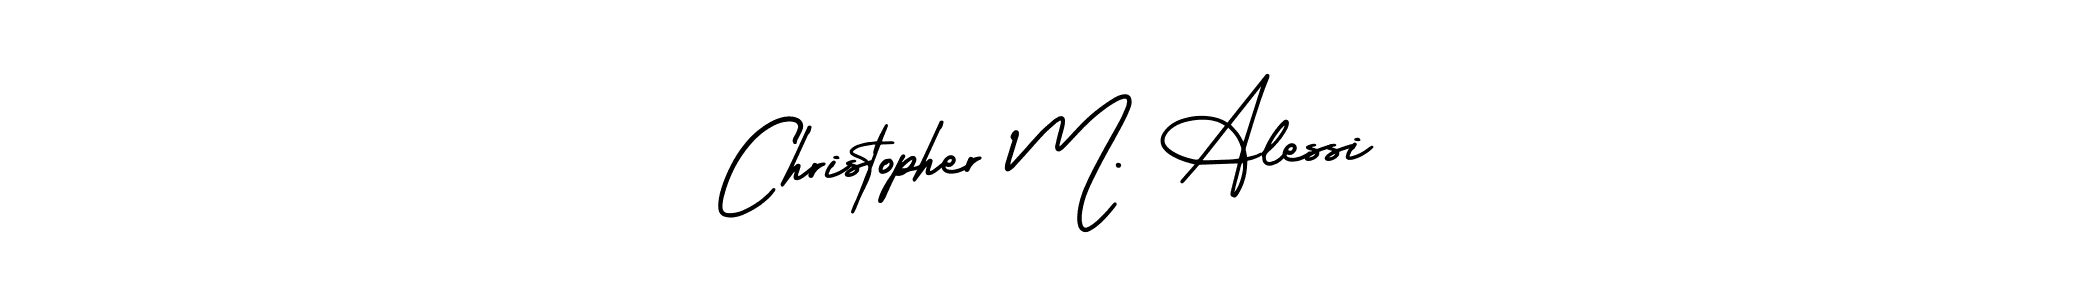 Best and Professional Signature Style for Christopher M. Alessi. AmerikaSignatureDemo-Regular Best Signature Style Collection. Christopher M. Alessi signature style 3 images and pictures png